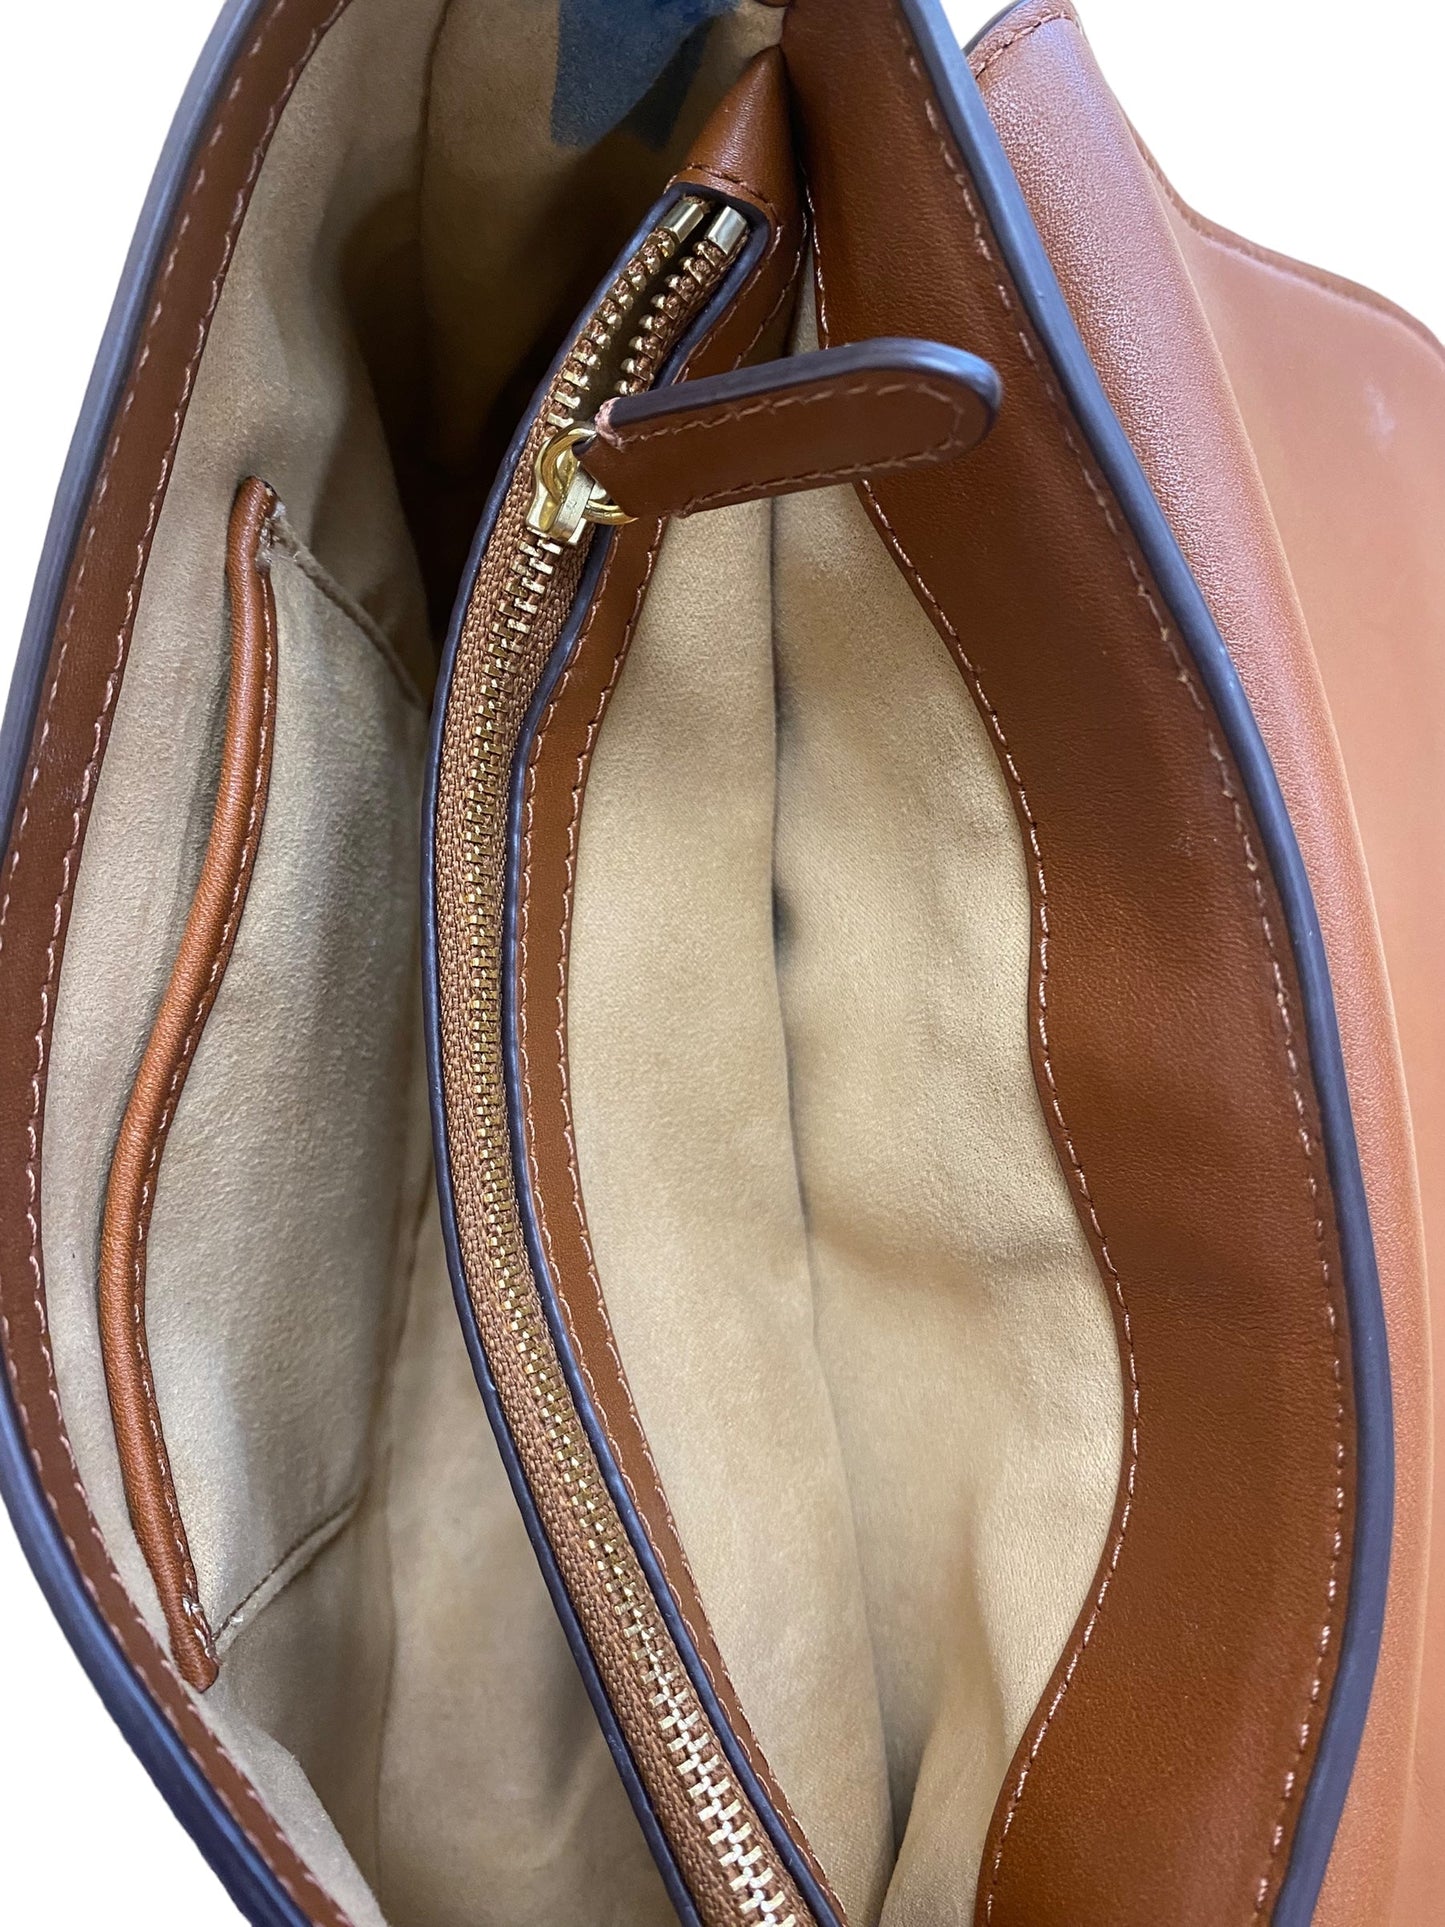 Handbag Designer Ralph Lauren, Size Medium